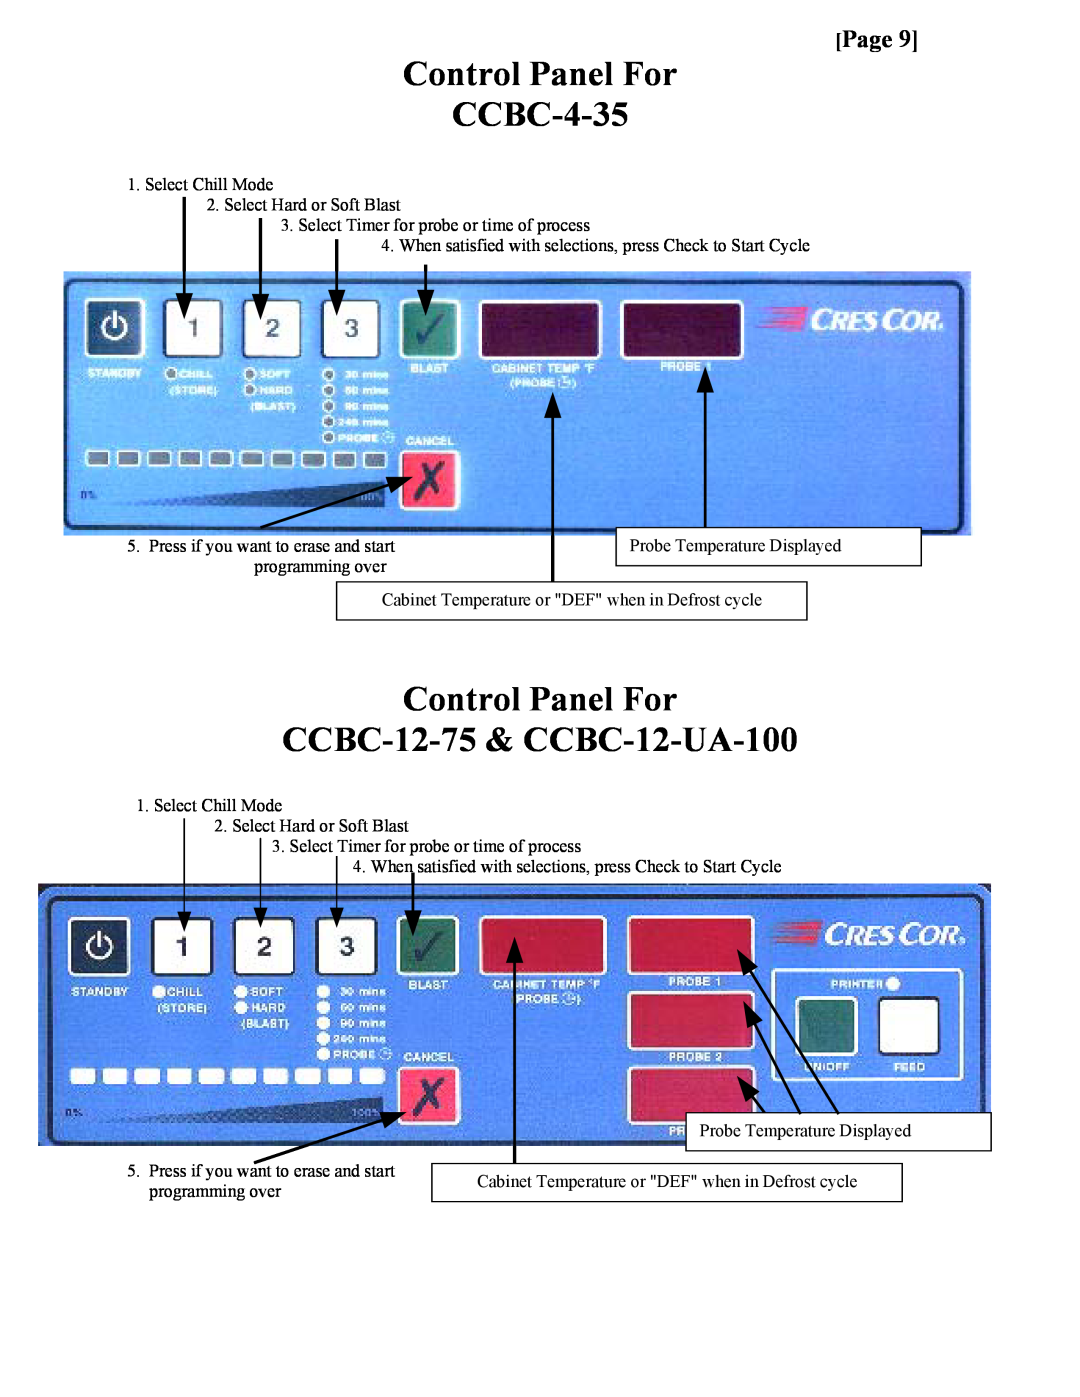 Cres Cor CCBC12-UA-100 service manual Control Panel For CCBC-4-35, Control Panel For CCBC-12-75& CCBC-12-UA-100, Page 